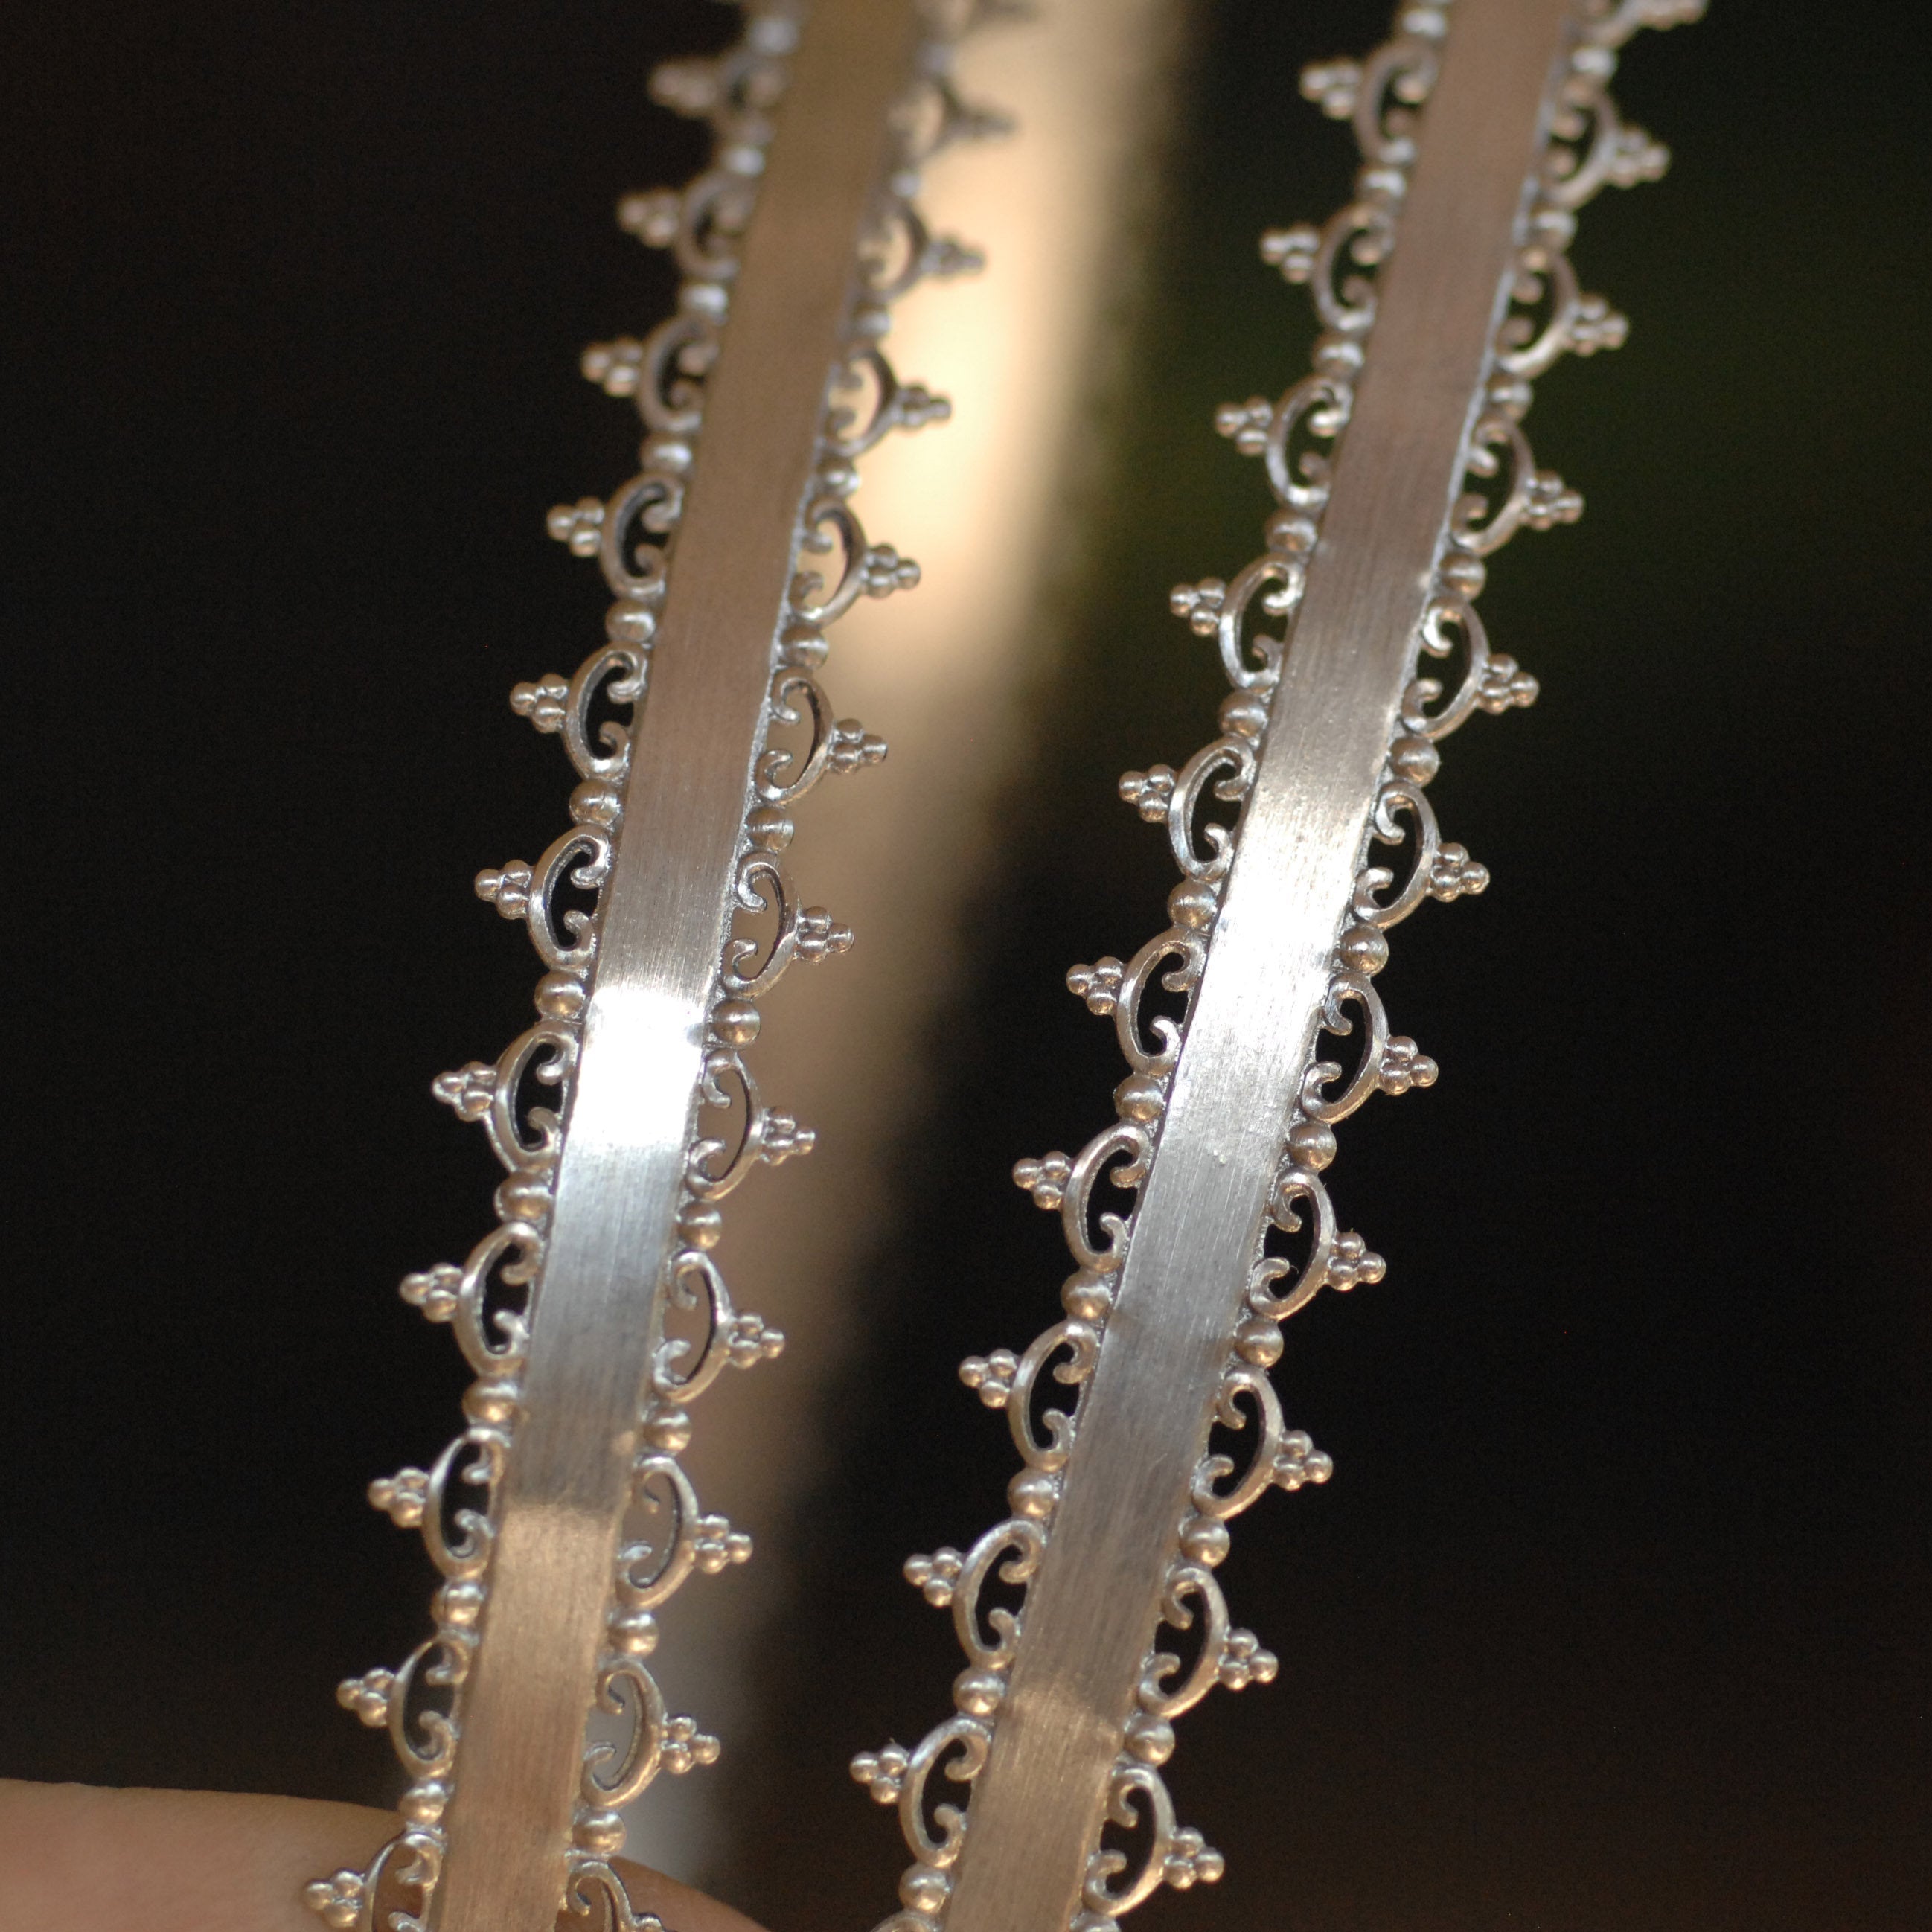 12 inch Gallery Pattern wire - 6mm Sterling silver 935 Decorative Bezel wire